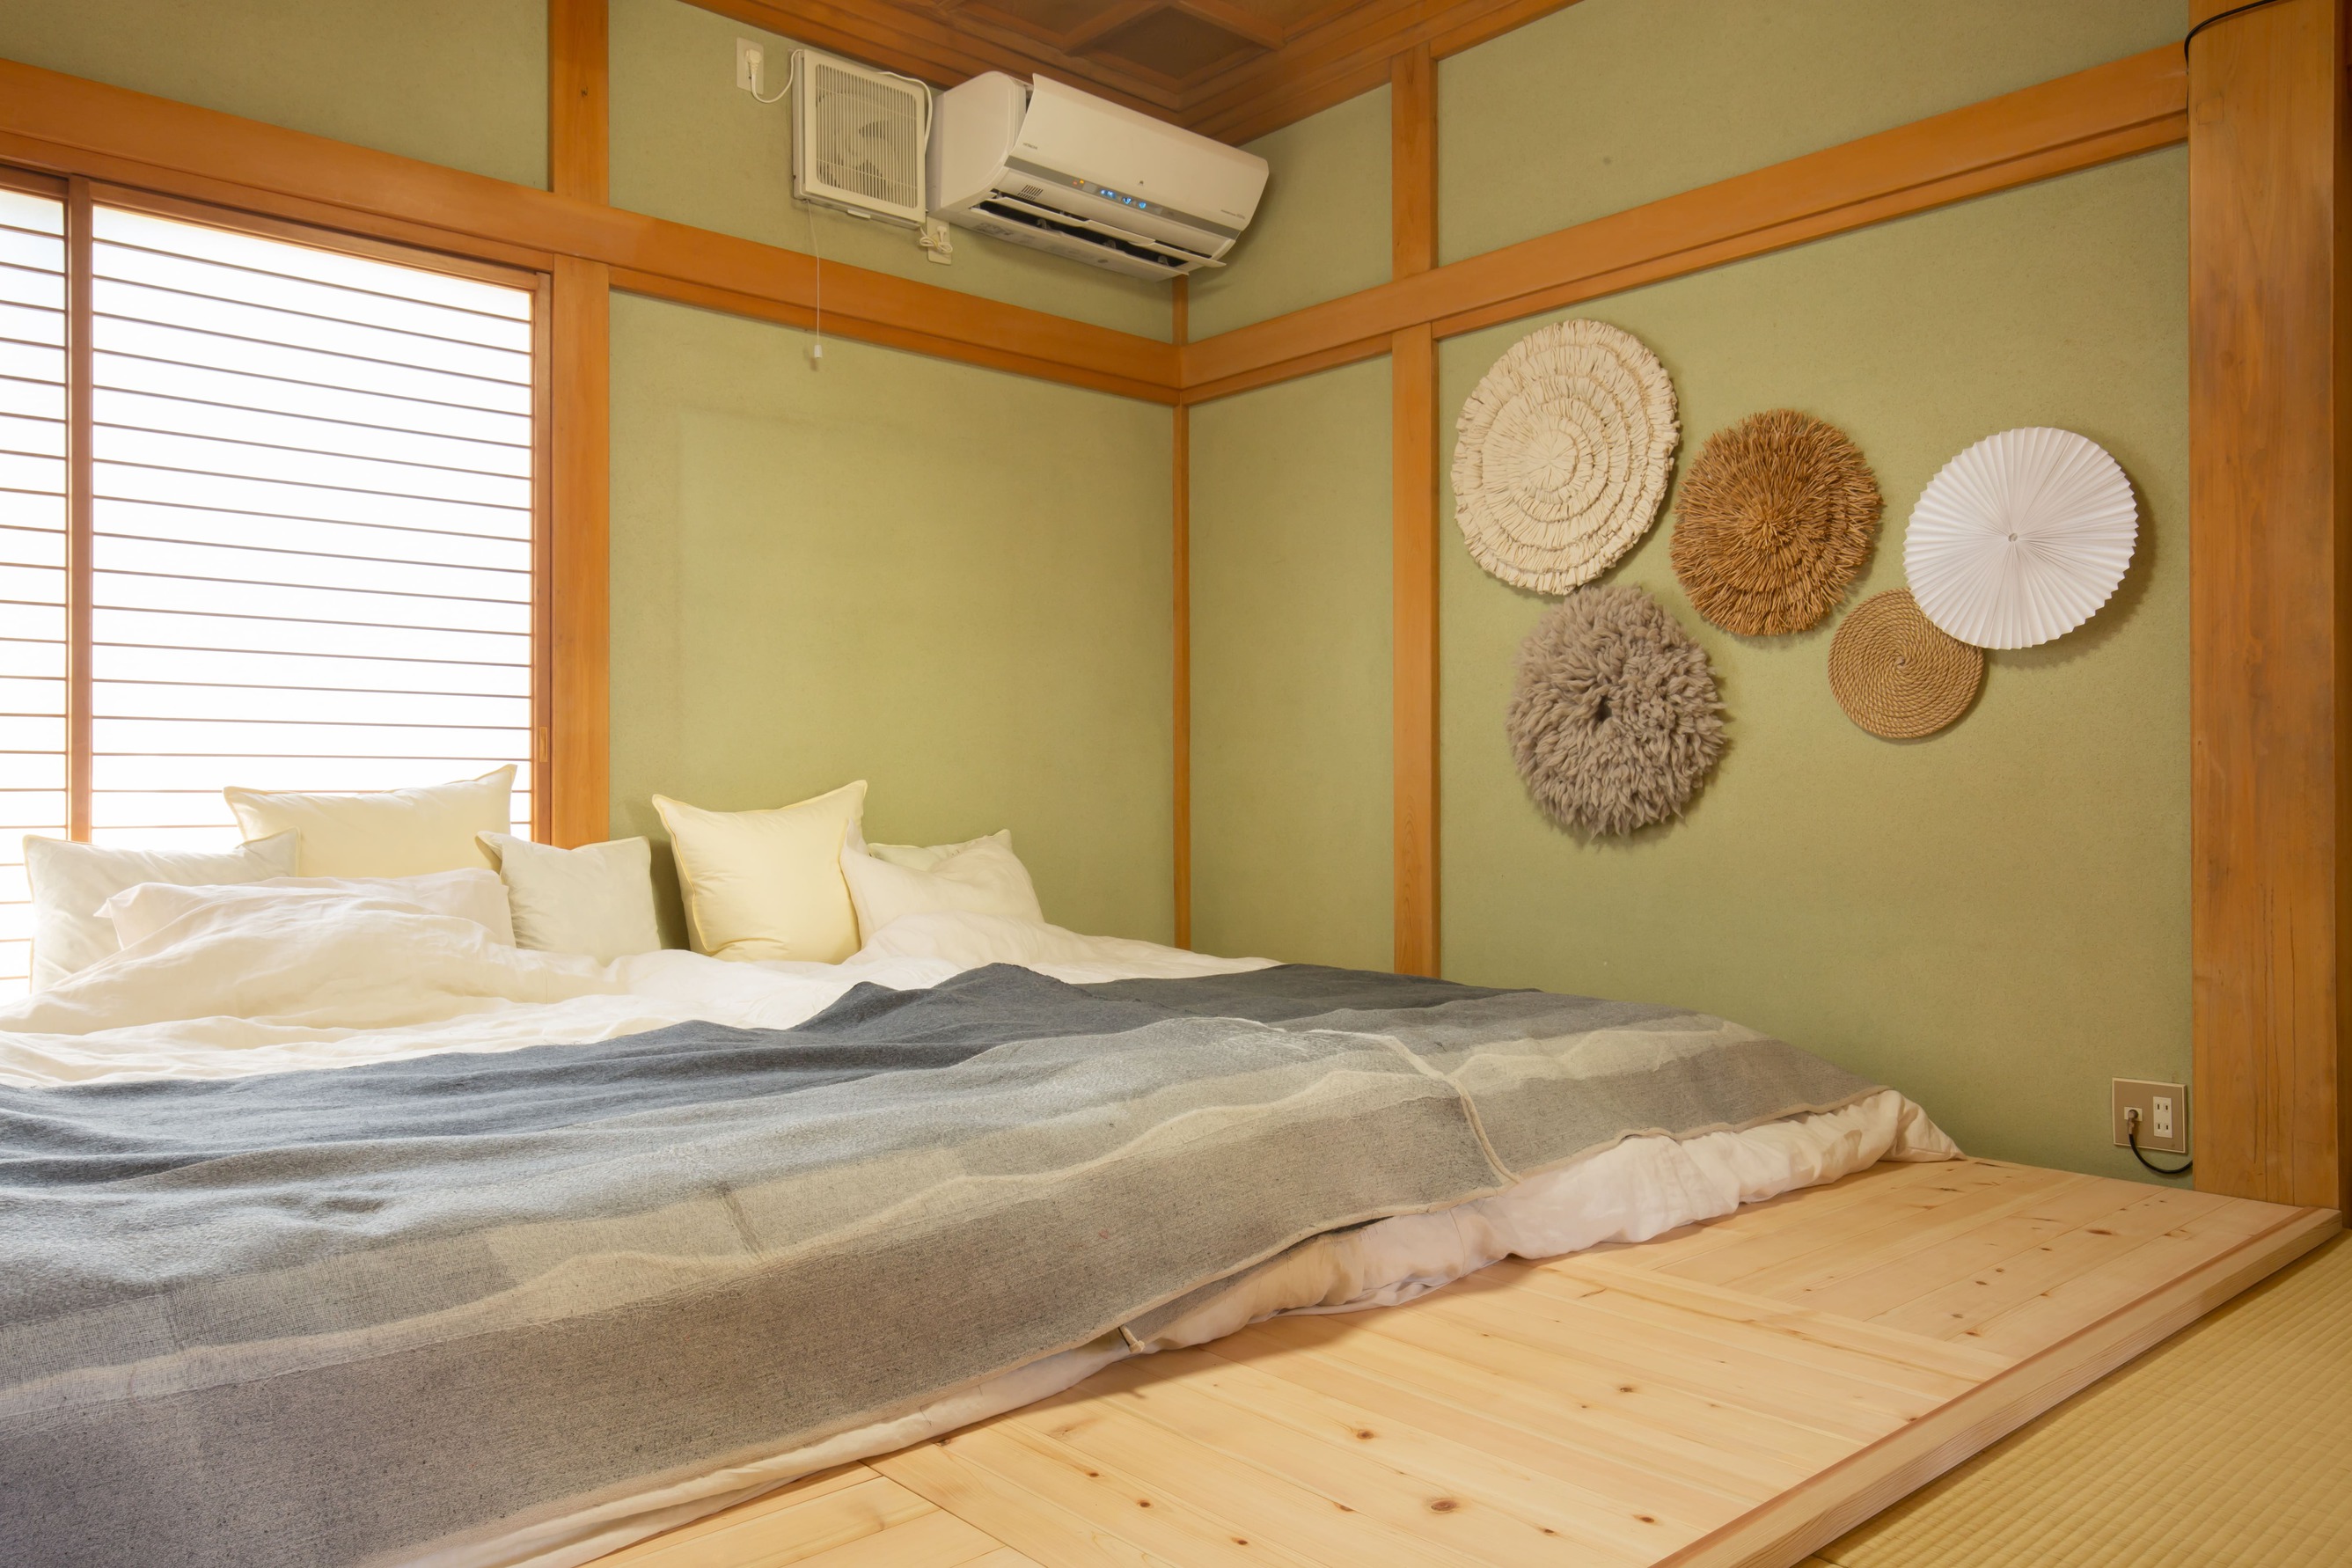 【１F寝室】富士山の雪景色をイメージして・・・